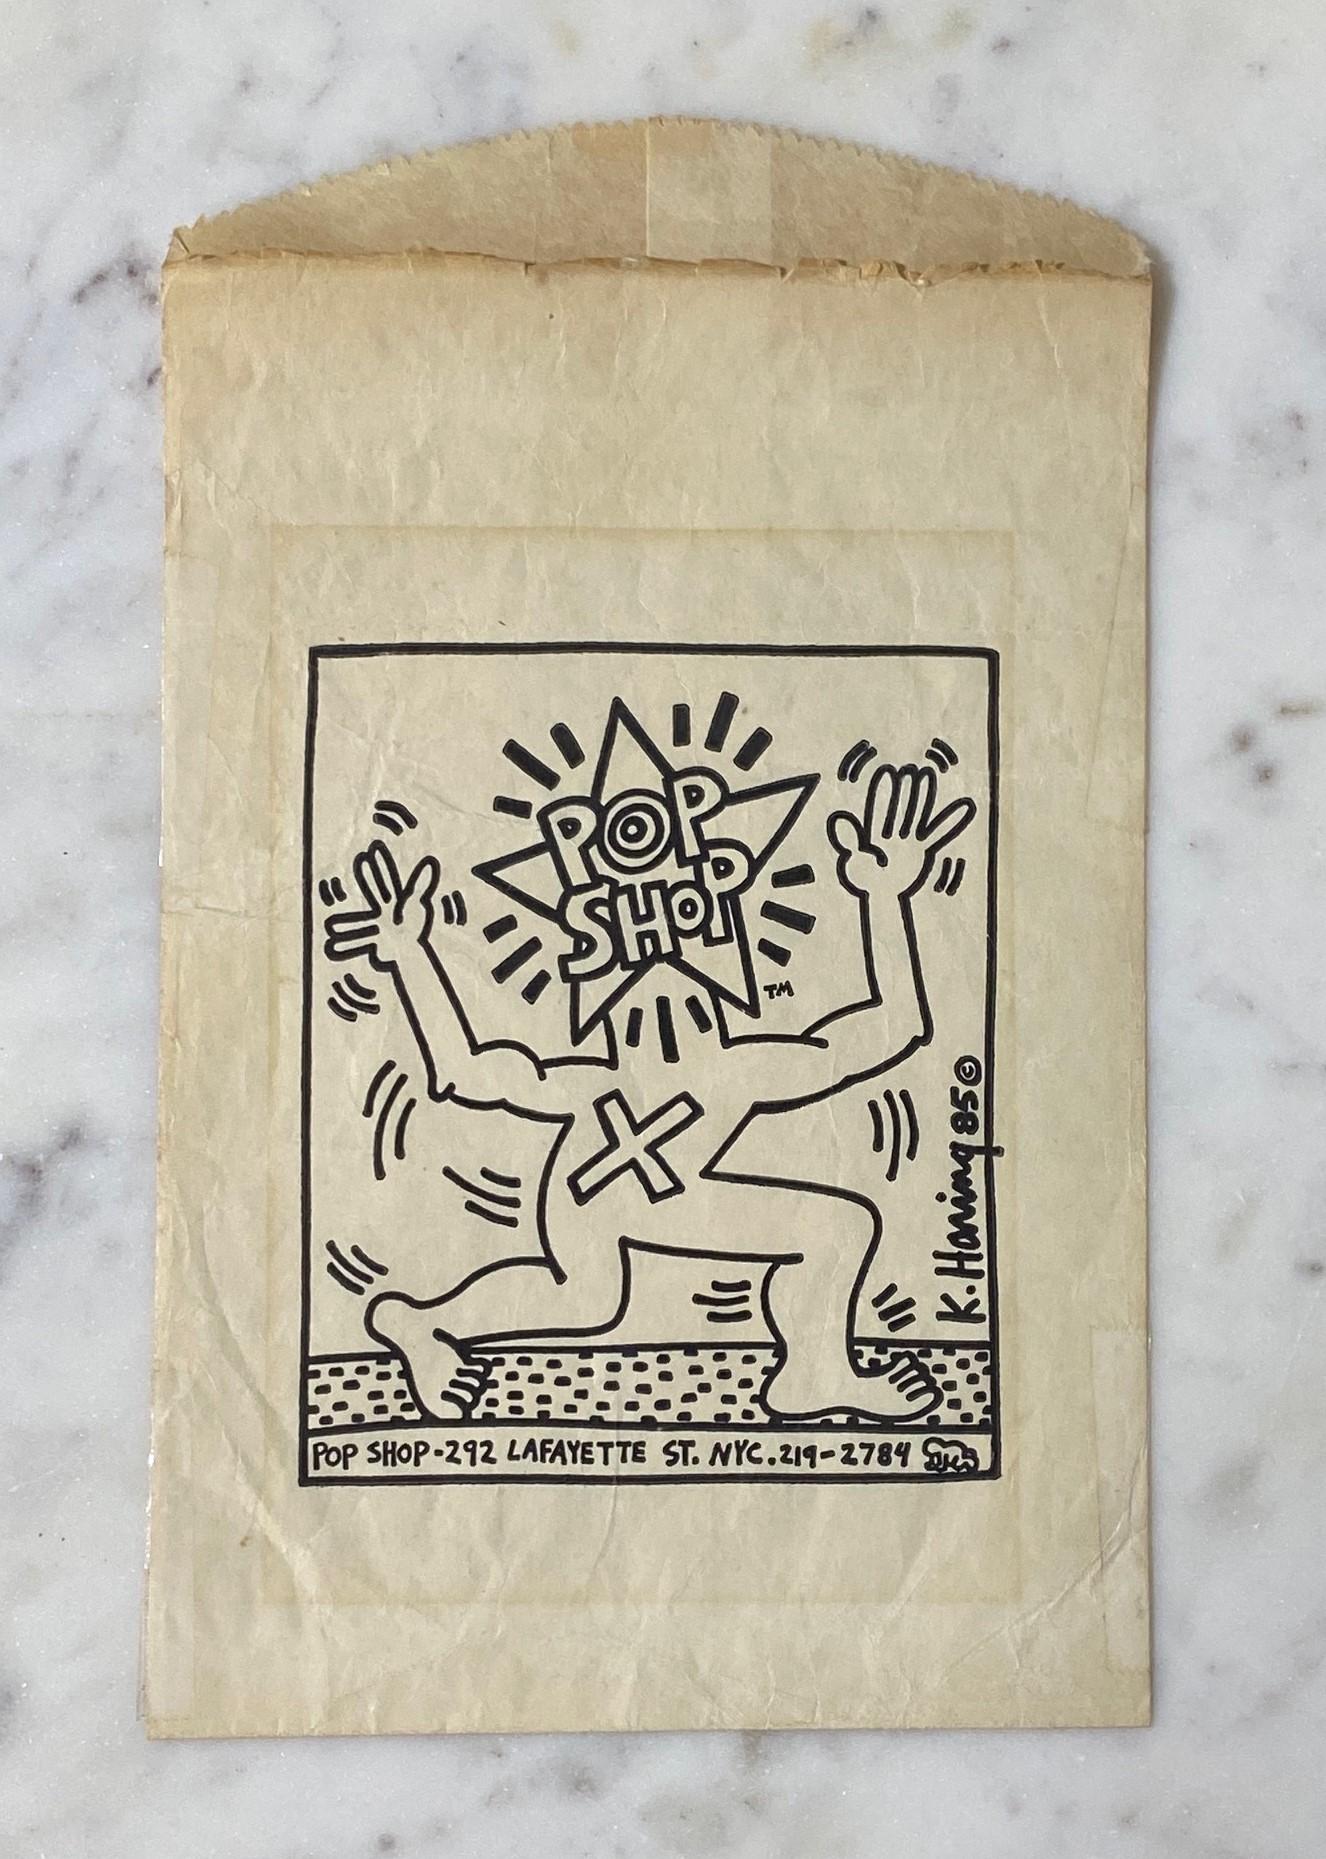 Modern Keith Haring Original New York City Pop Shop Lithograph Bag With Bonus, 1980s For Sale